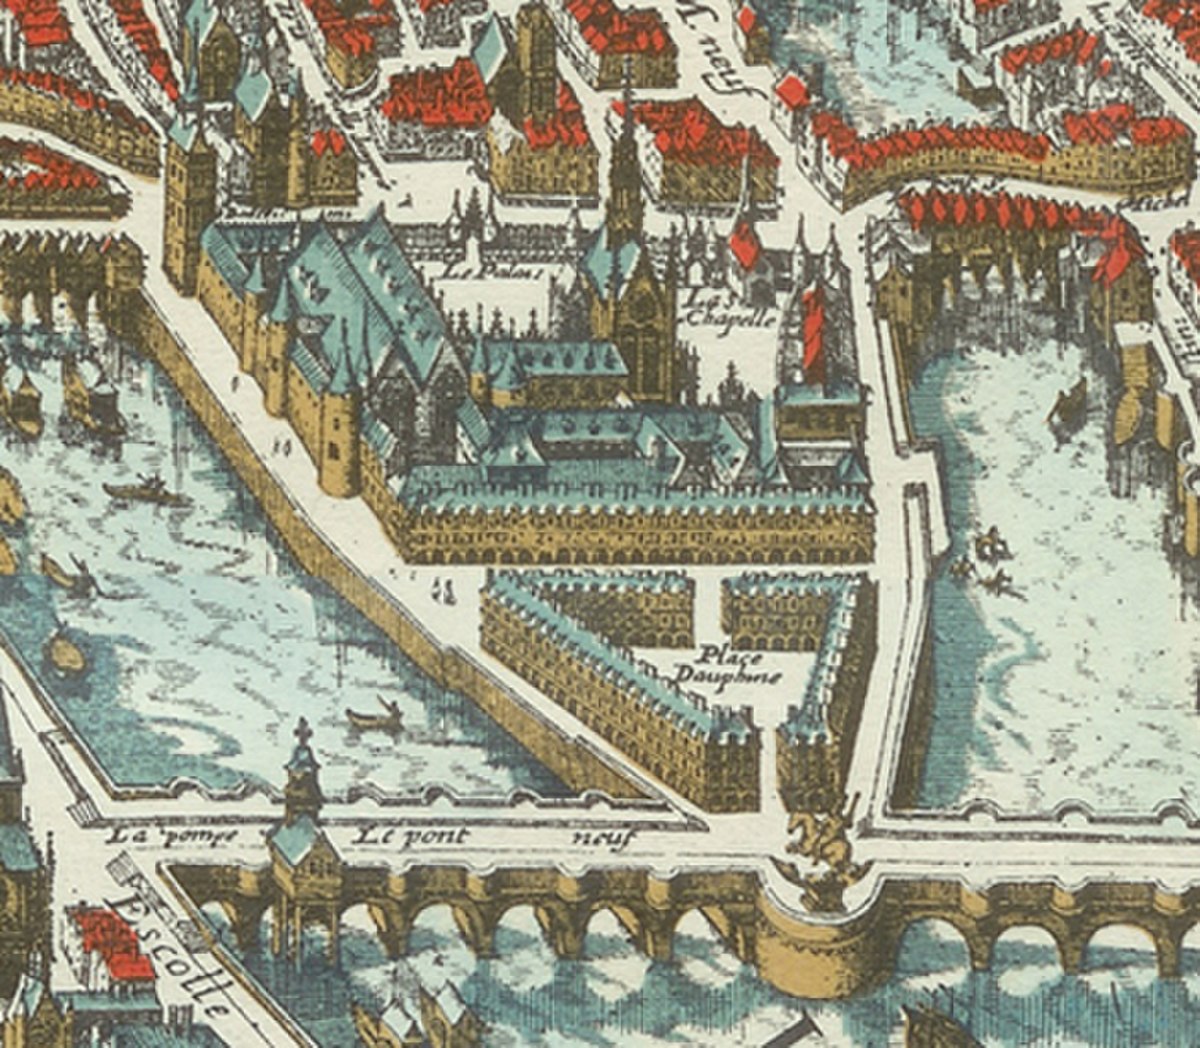 Paris under Henry IV